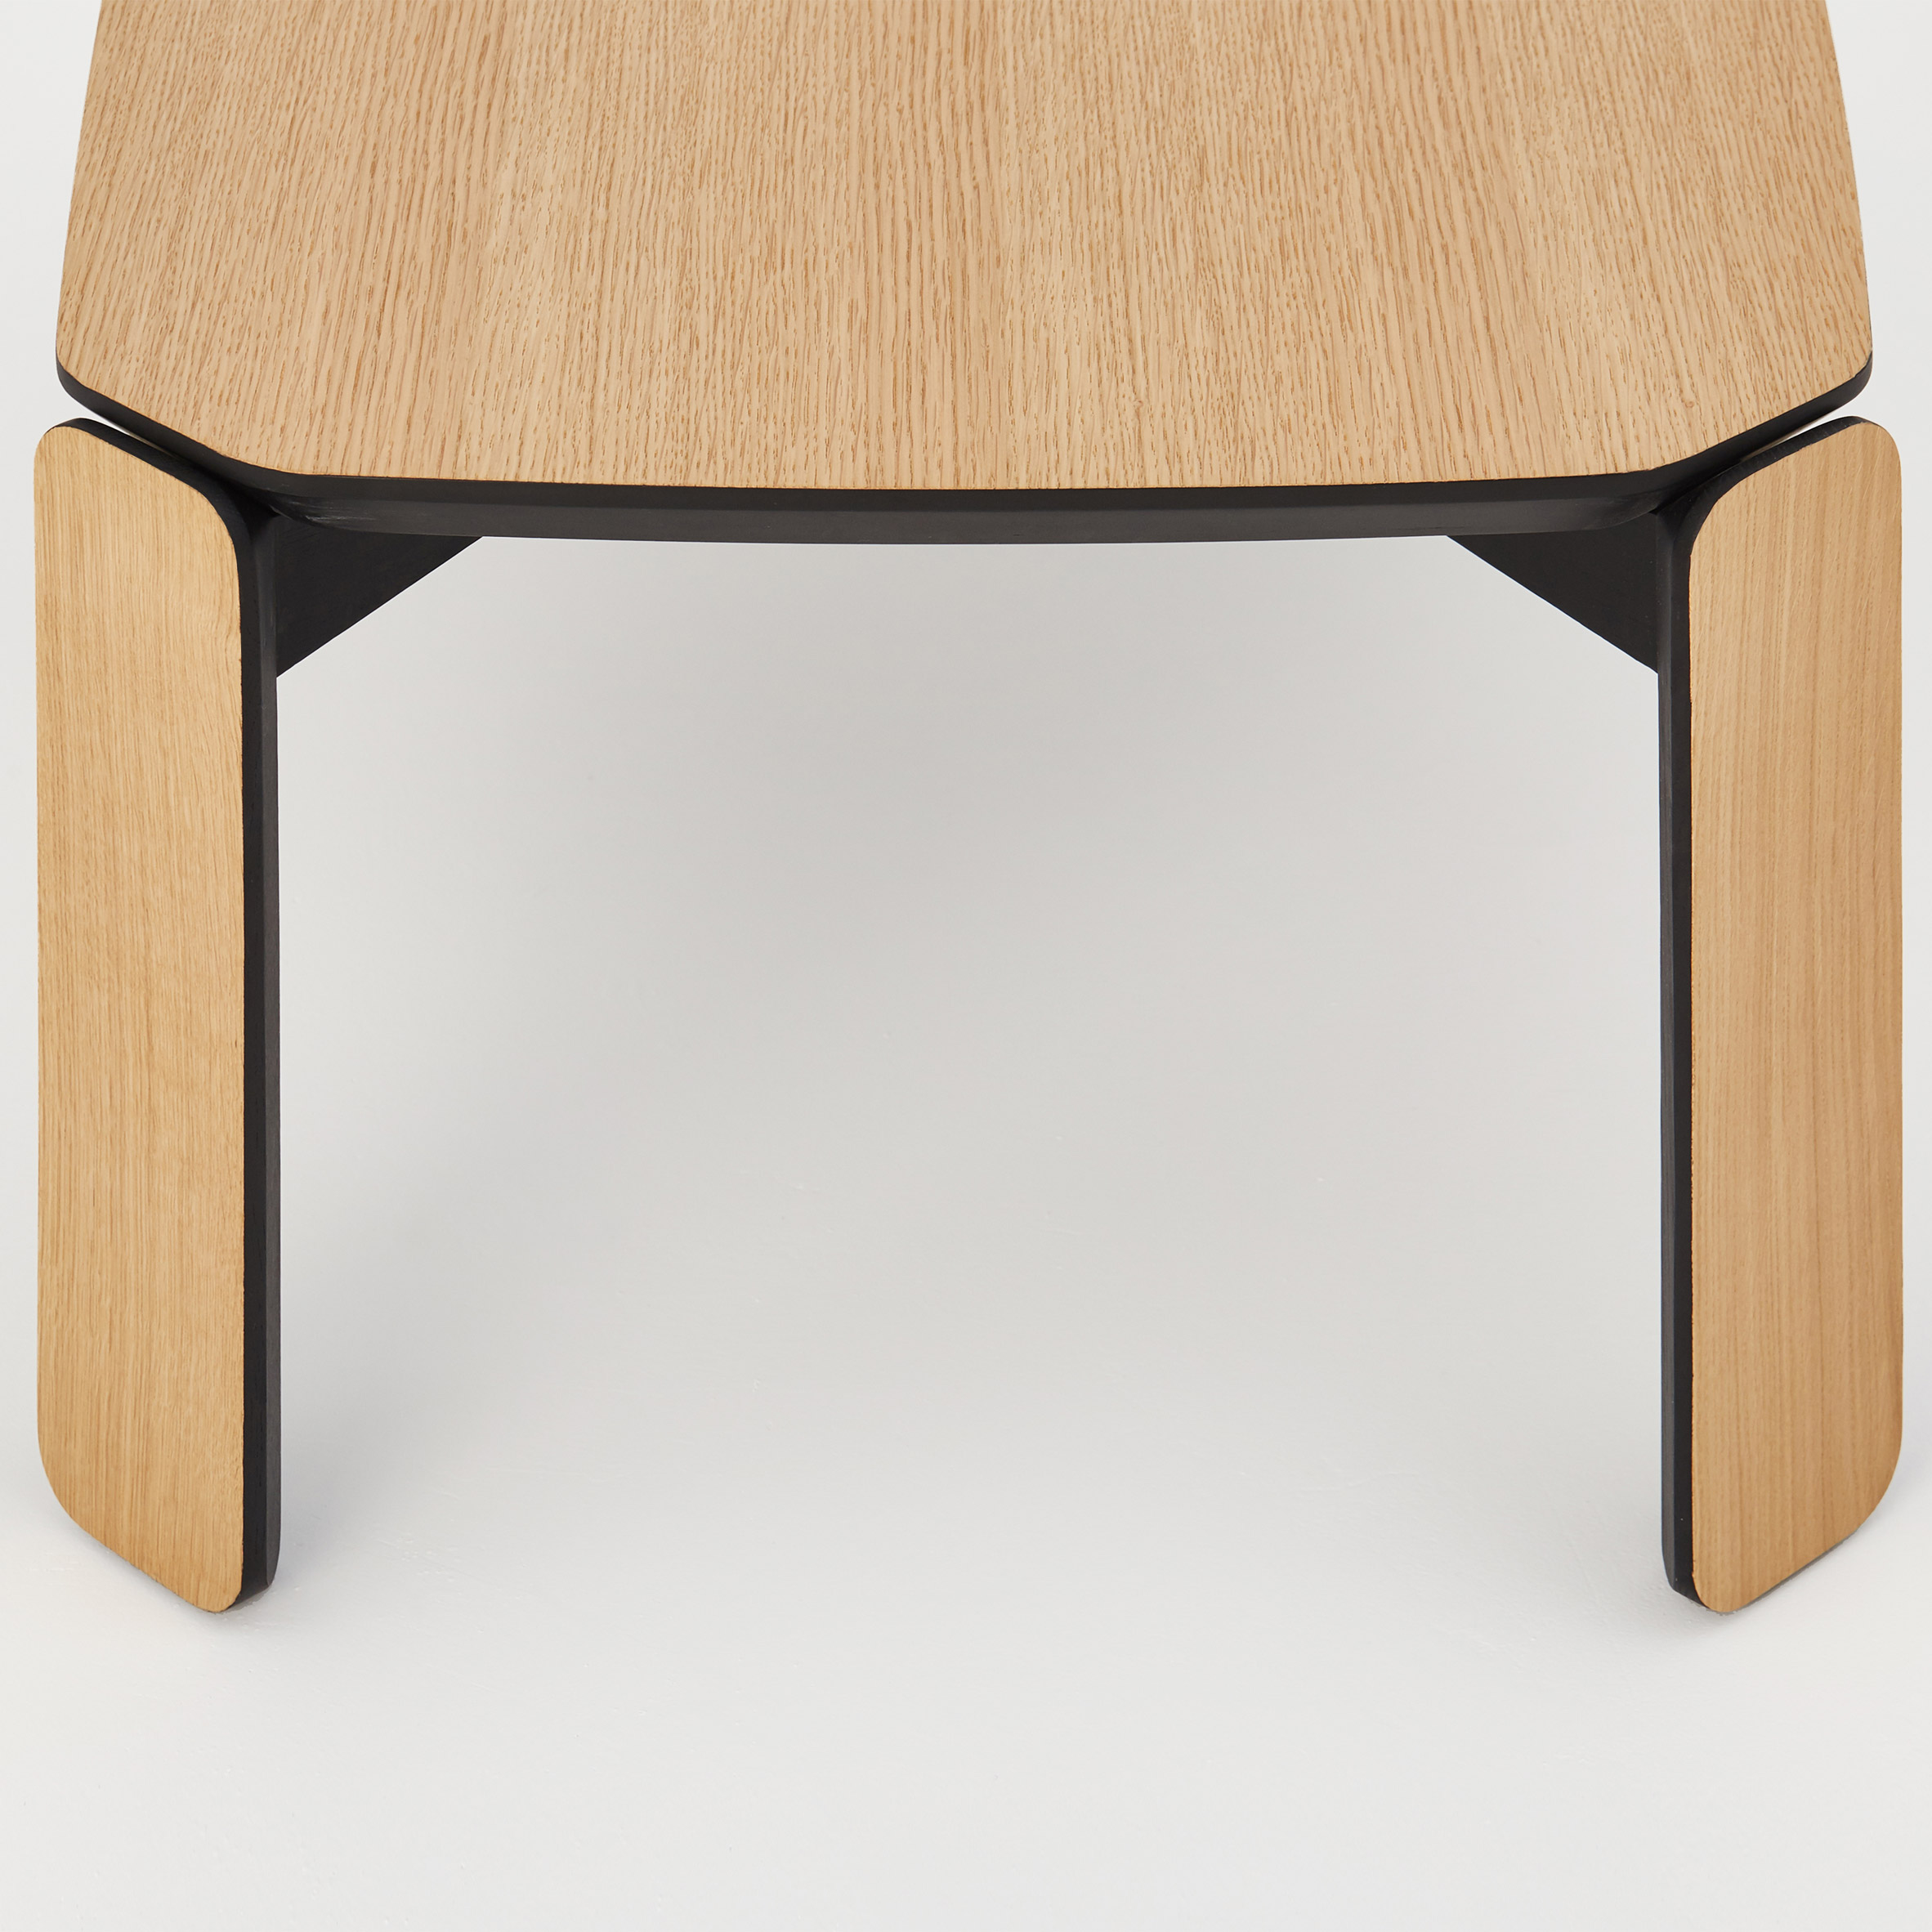 45-table-system-inyard-la-selva-design-furniture_dezeen_2364_col_3